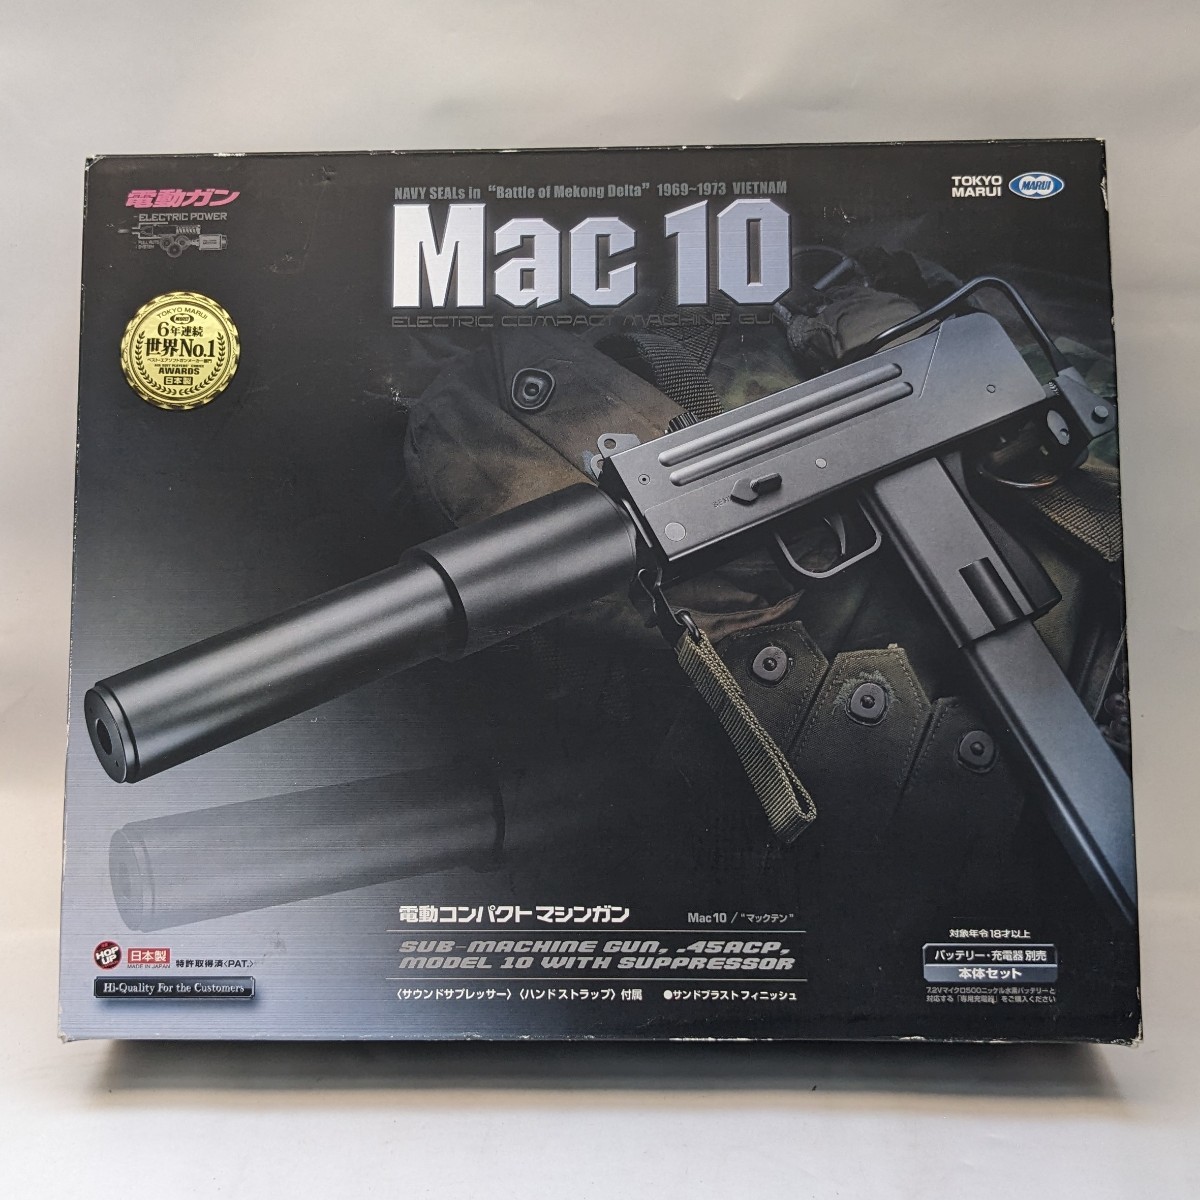 MARUI MAC10 Electric Compact Machine Gun 東京マルイ マック10 電動ガン イングラムM10 マシンピストル 18歳未満にはお譲りできません_画像1